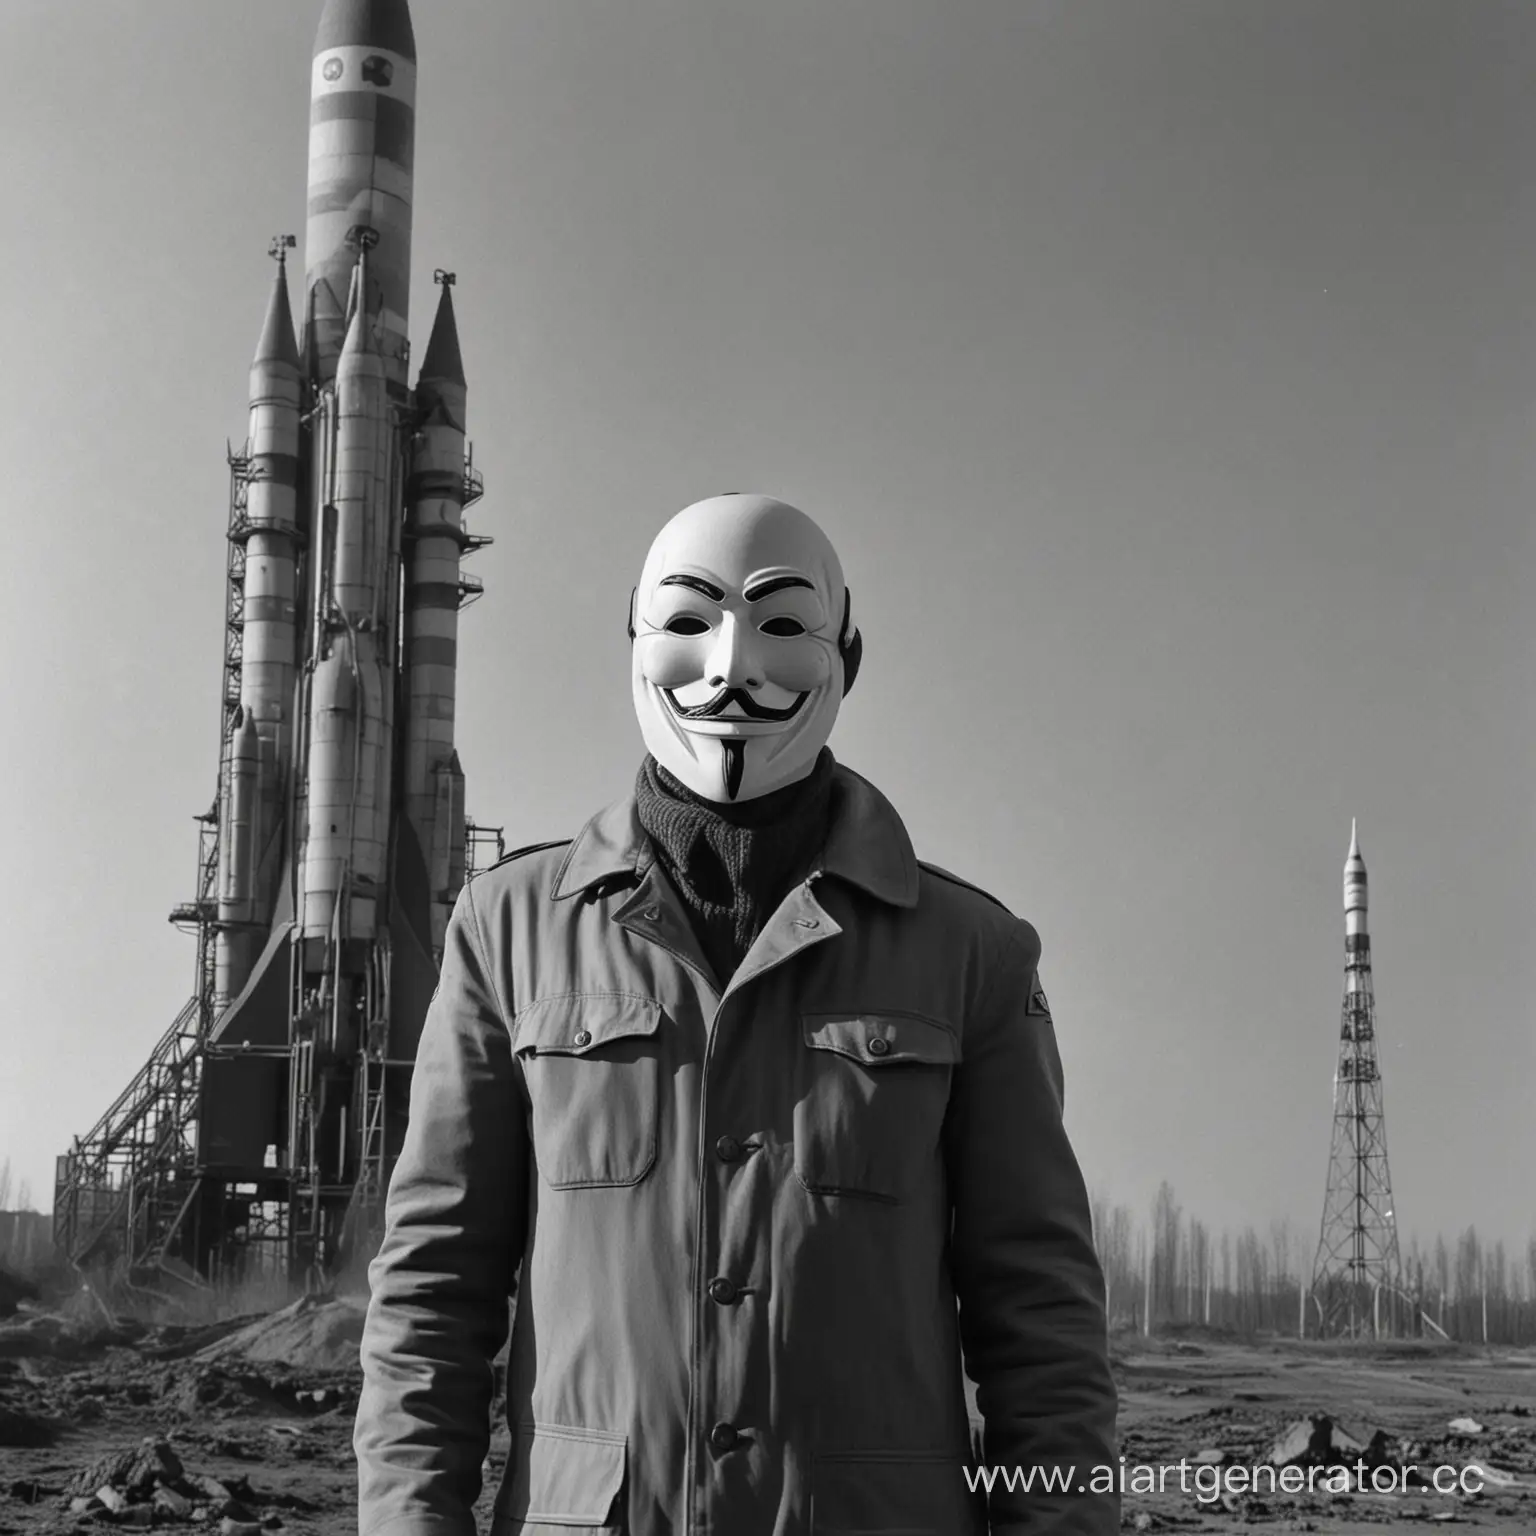 Мужчина в маске Анонимуса гордо стоит на фоне взлетающей ракеты СССР